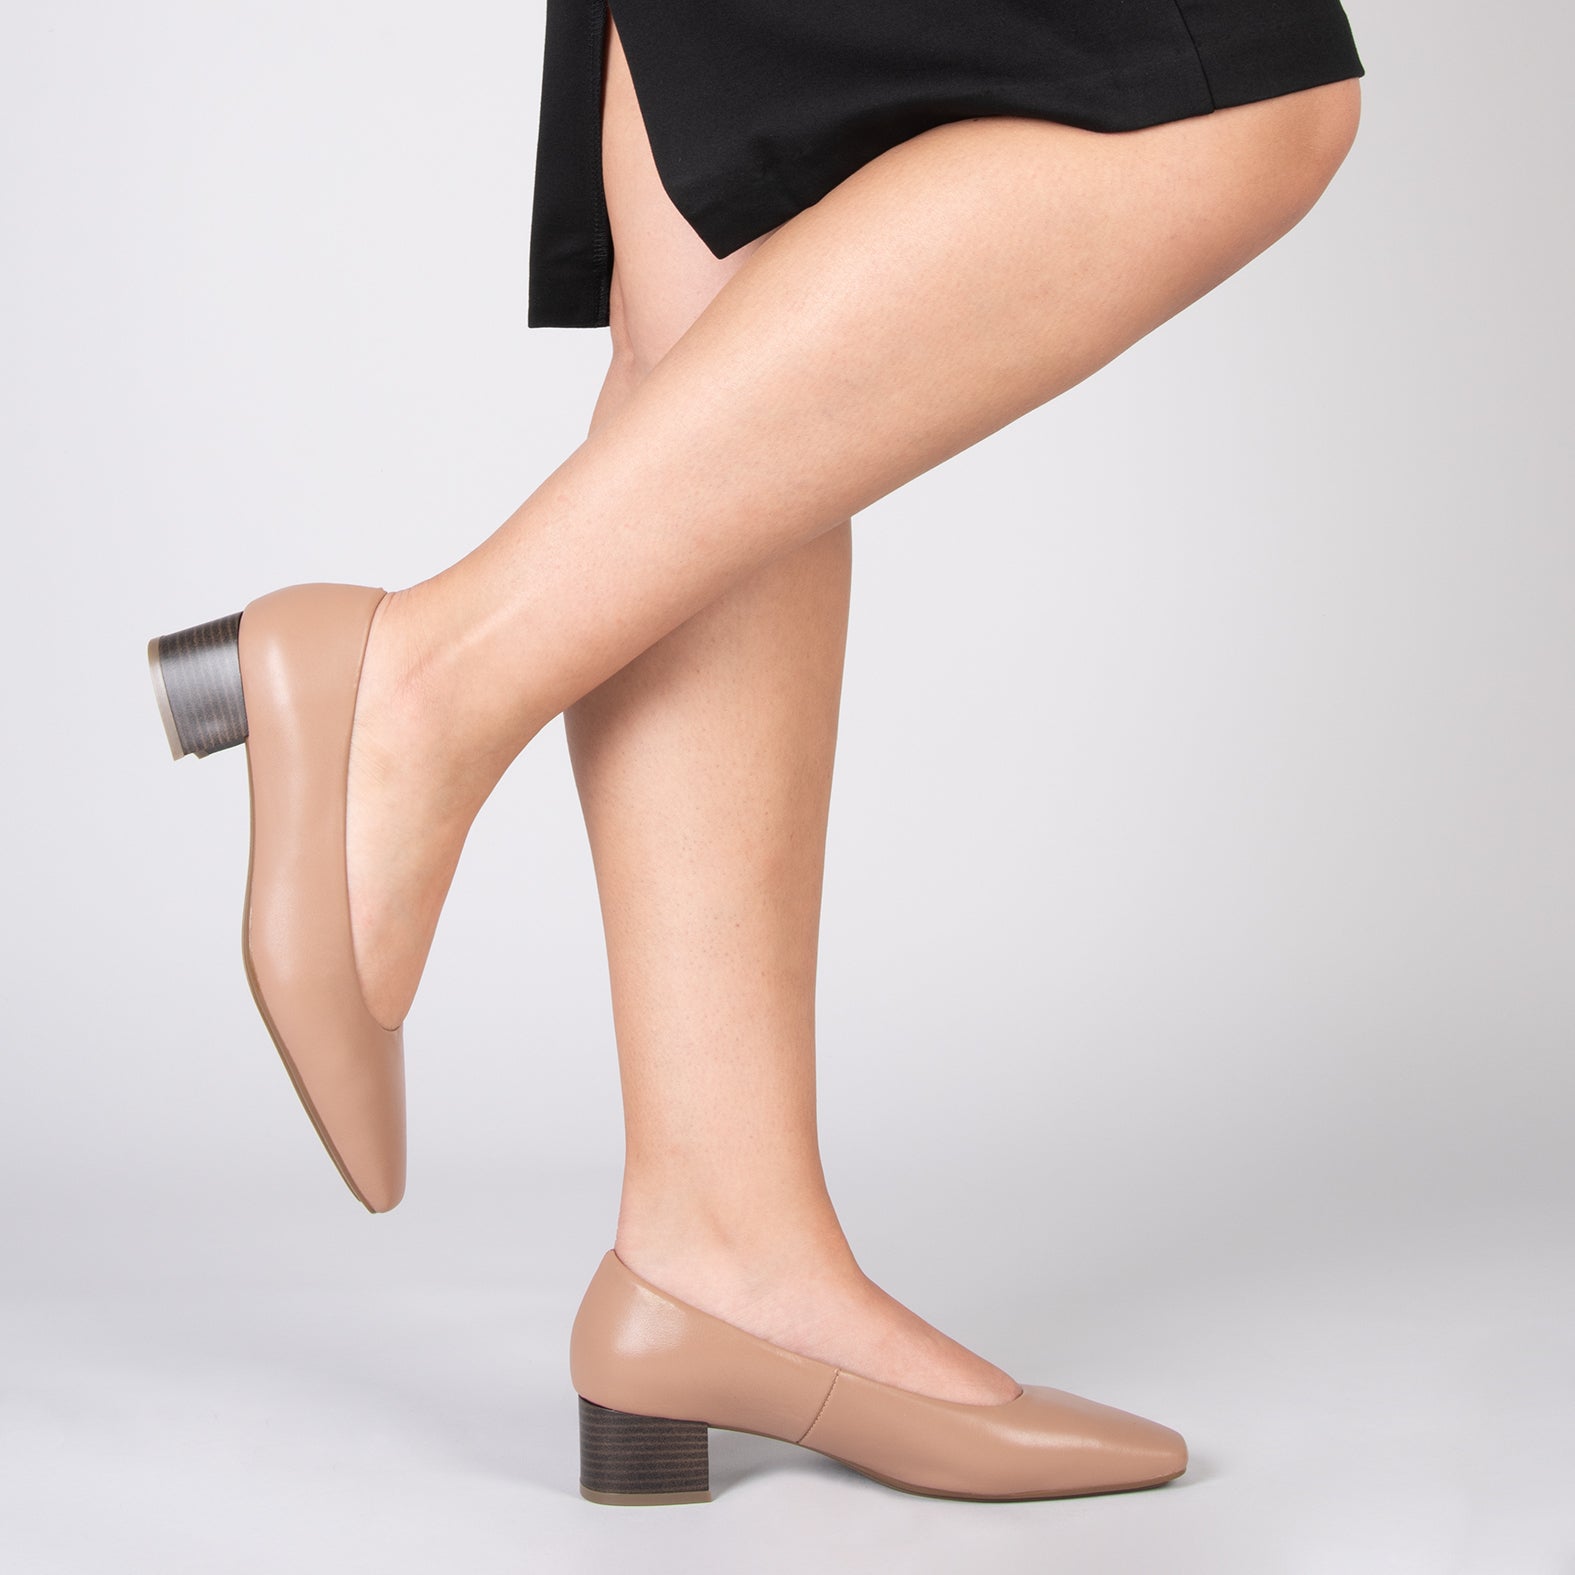 URBAN LADY – NUDE nappa leather low heels